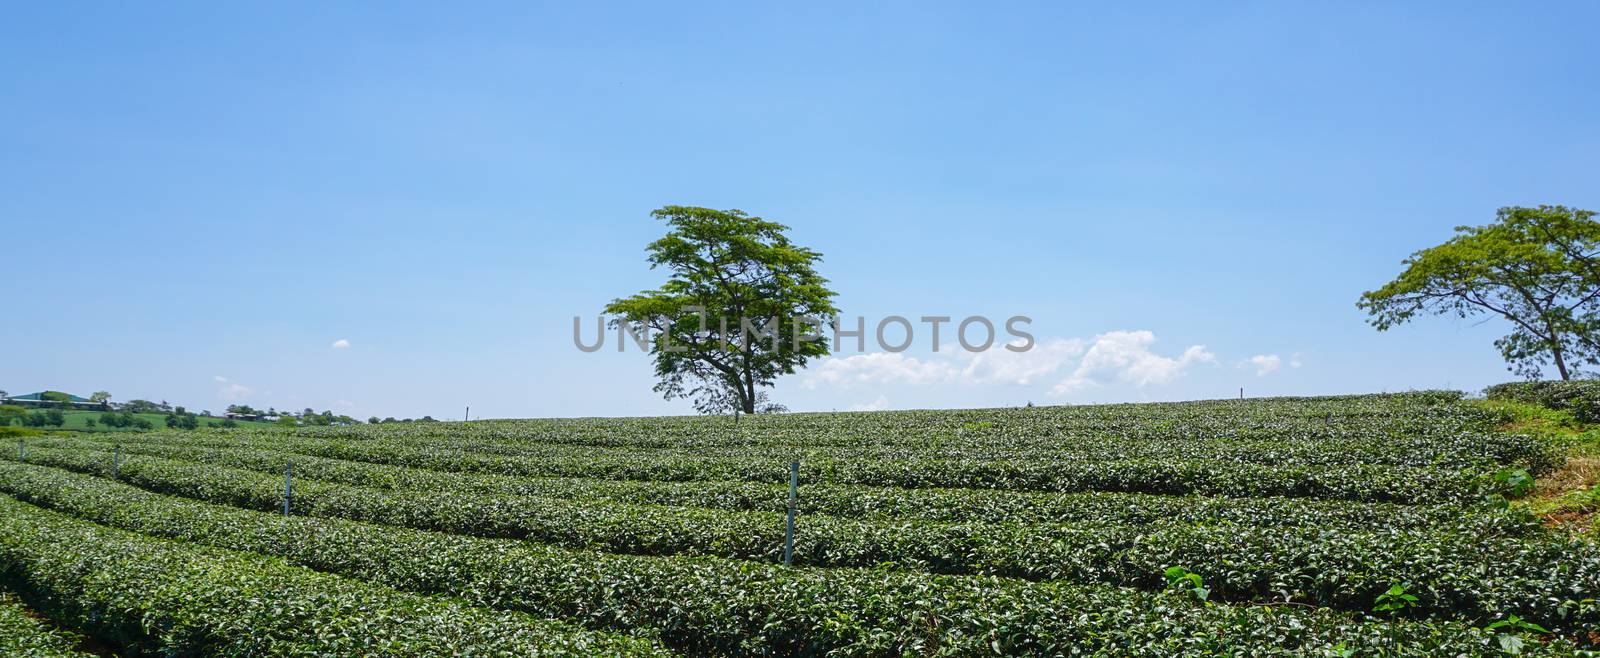 Tea farm at Bao Loc highland, Vietnam. Bao Loc tea hill is the best tea growing areas of Vietnam.